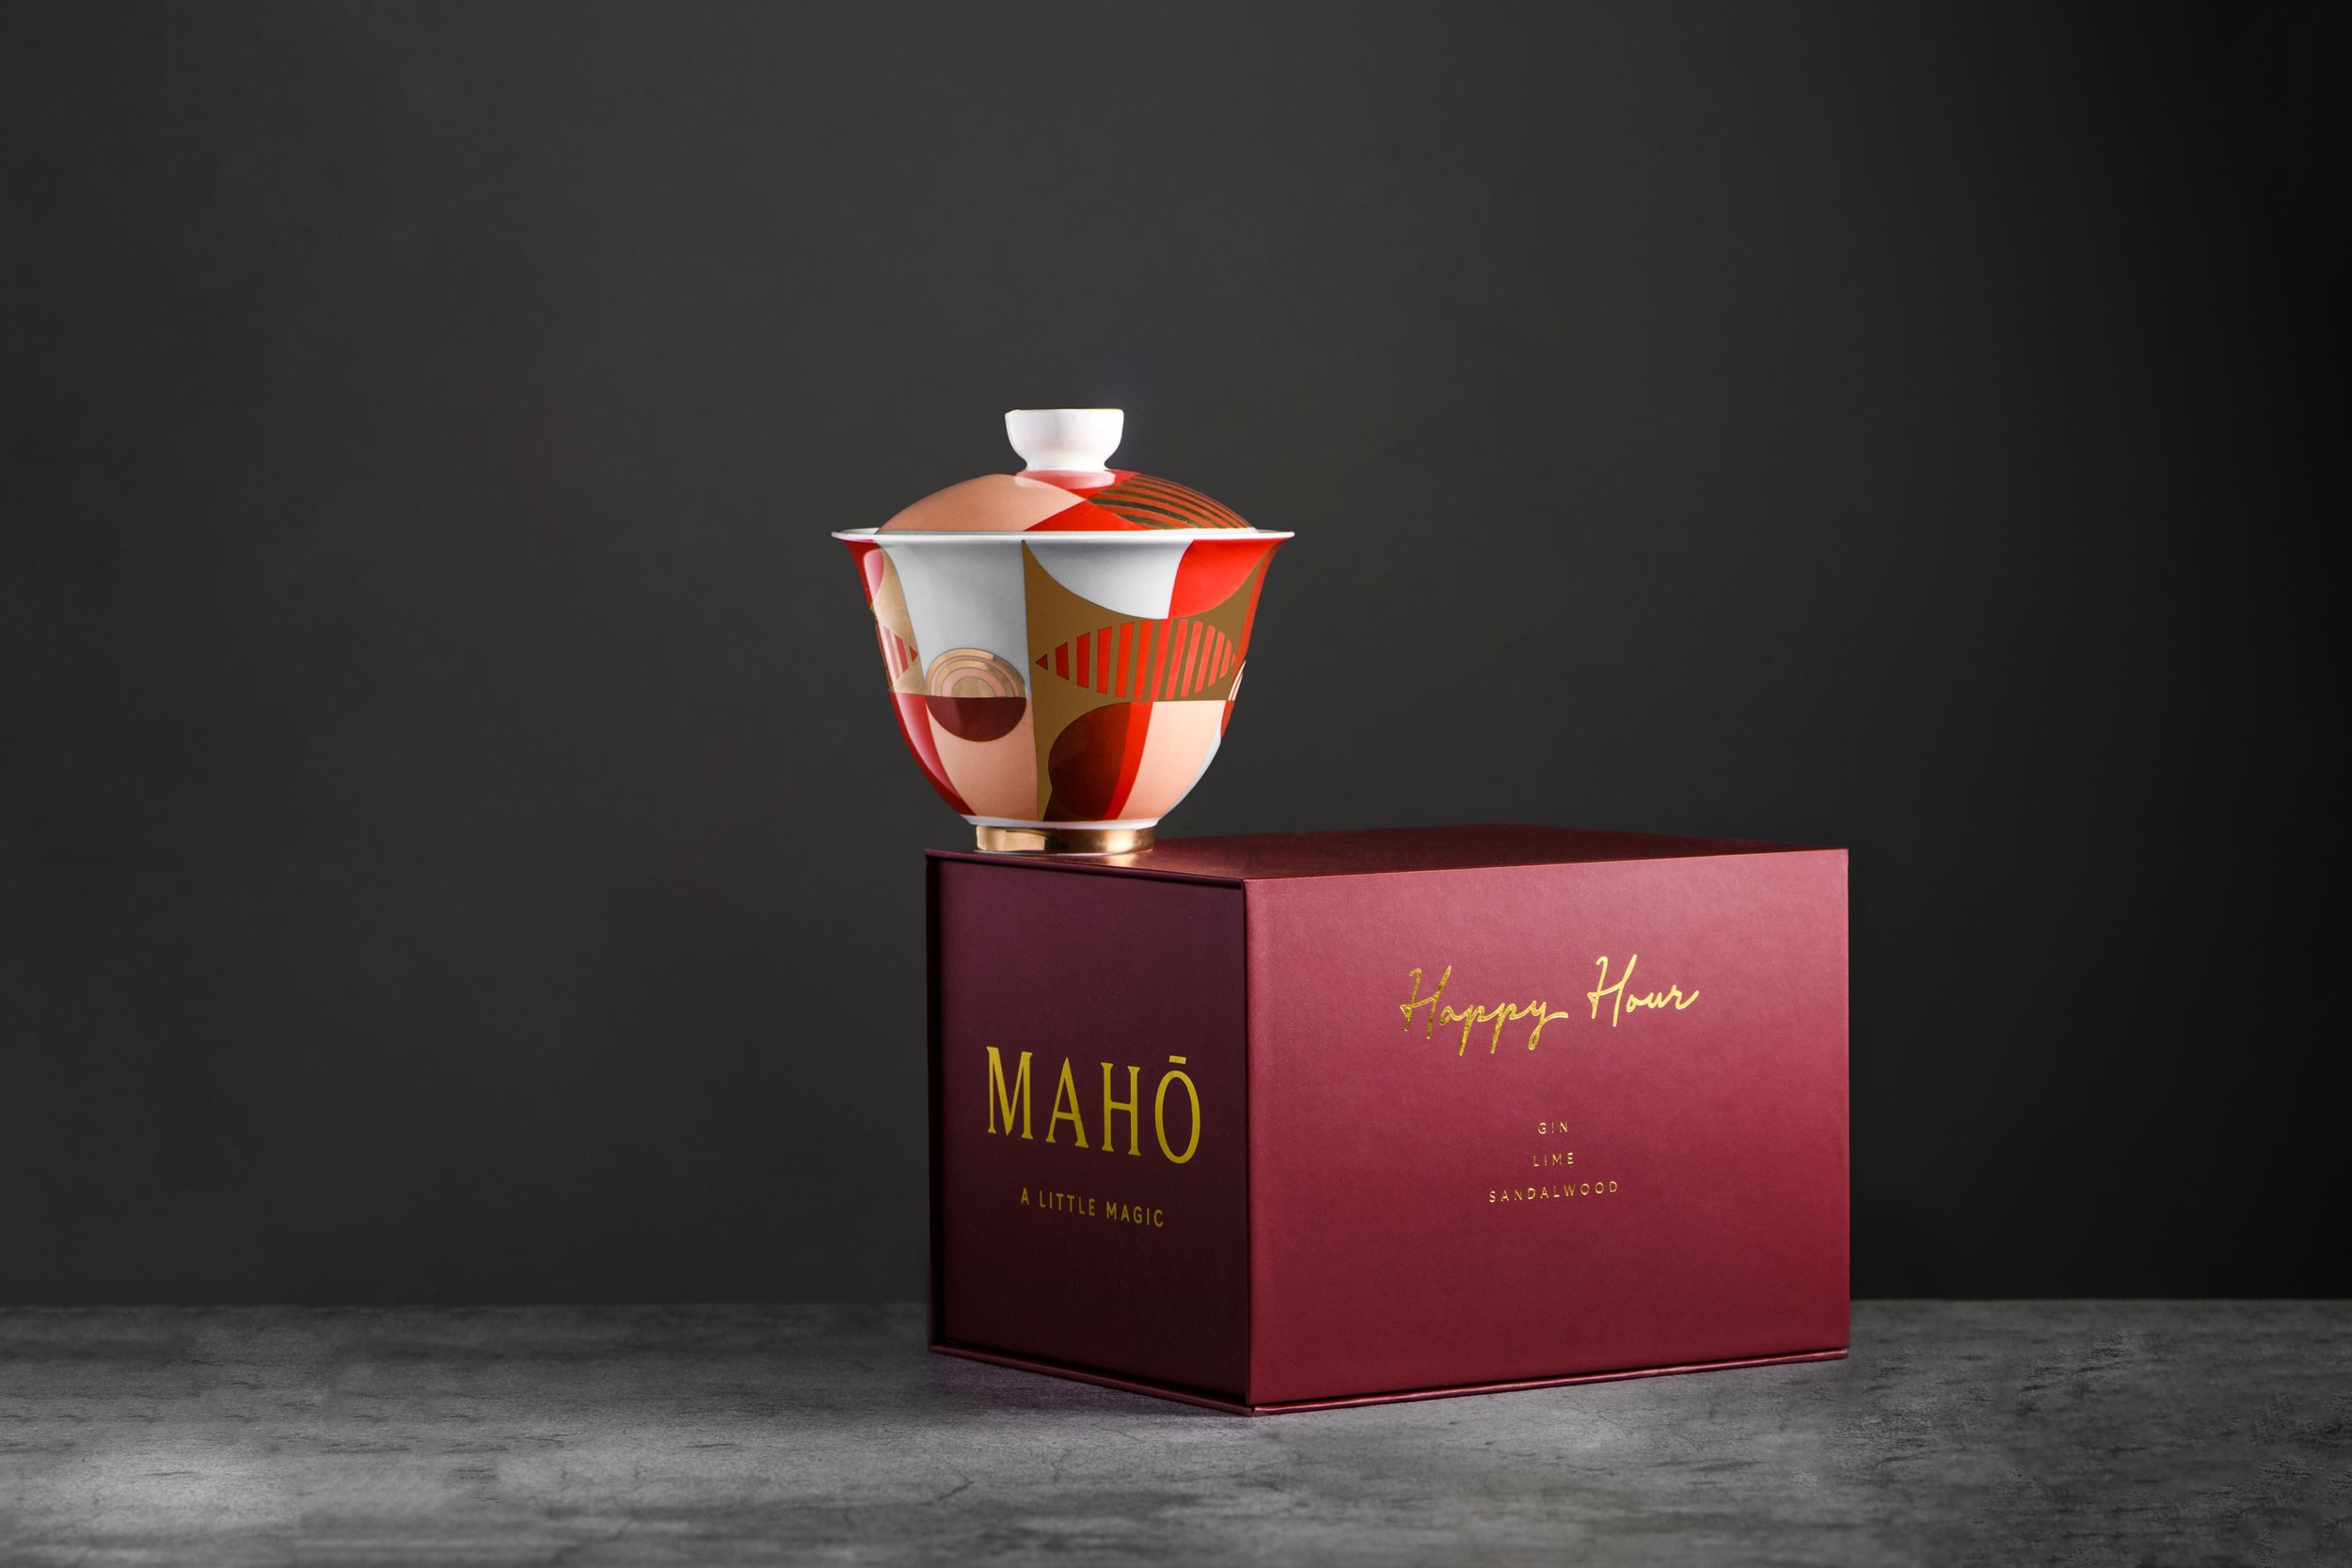 MAHO-Candle-with Box-Happy-Hour-AdobeRGB-400dpi -5856x3904px (1).jpg